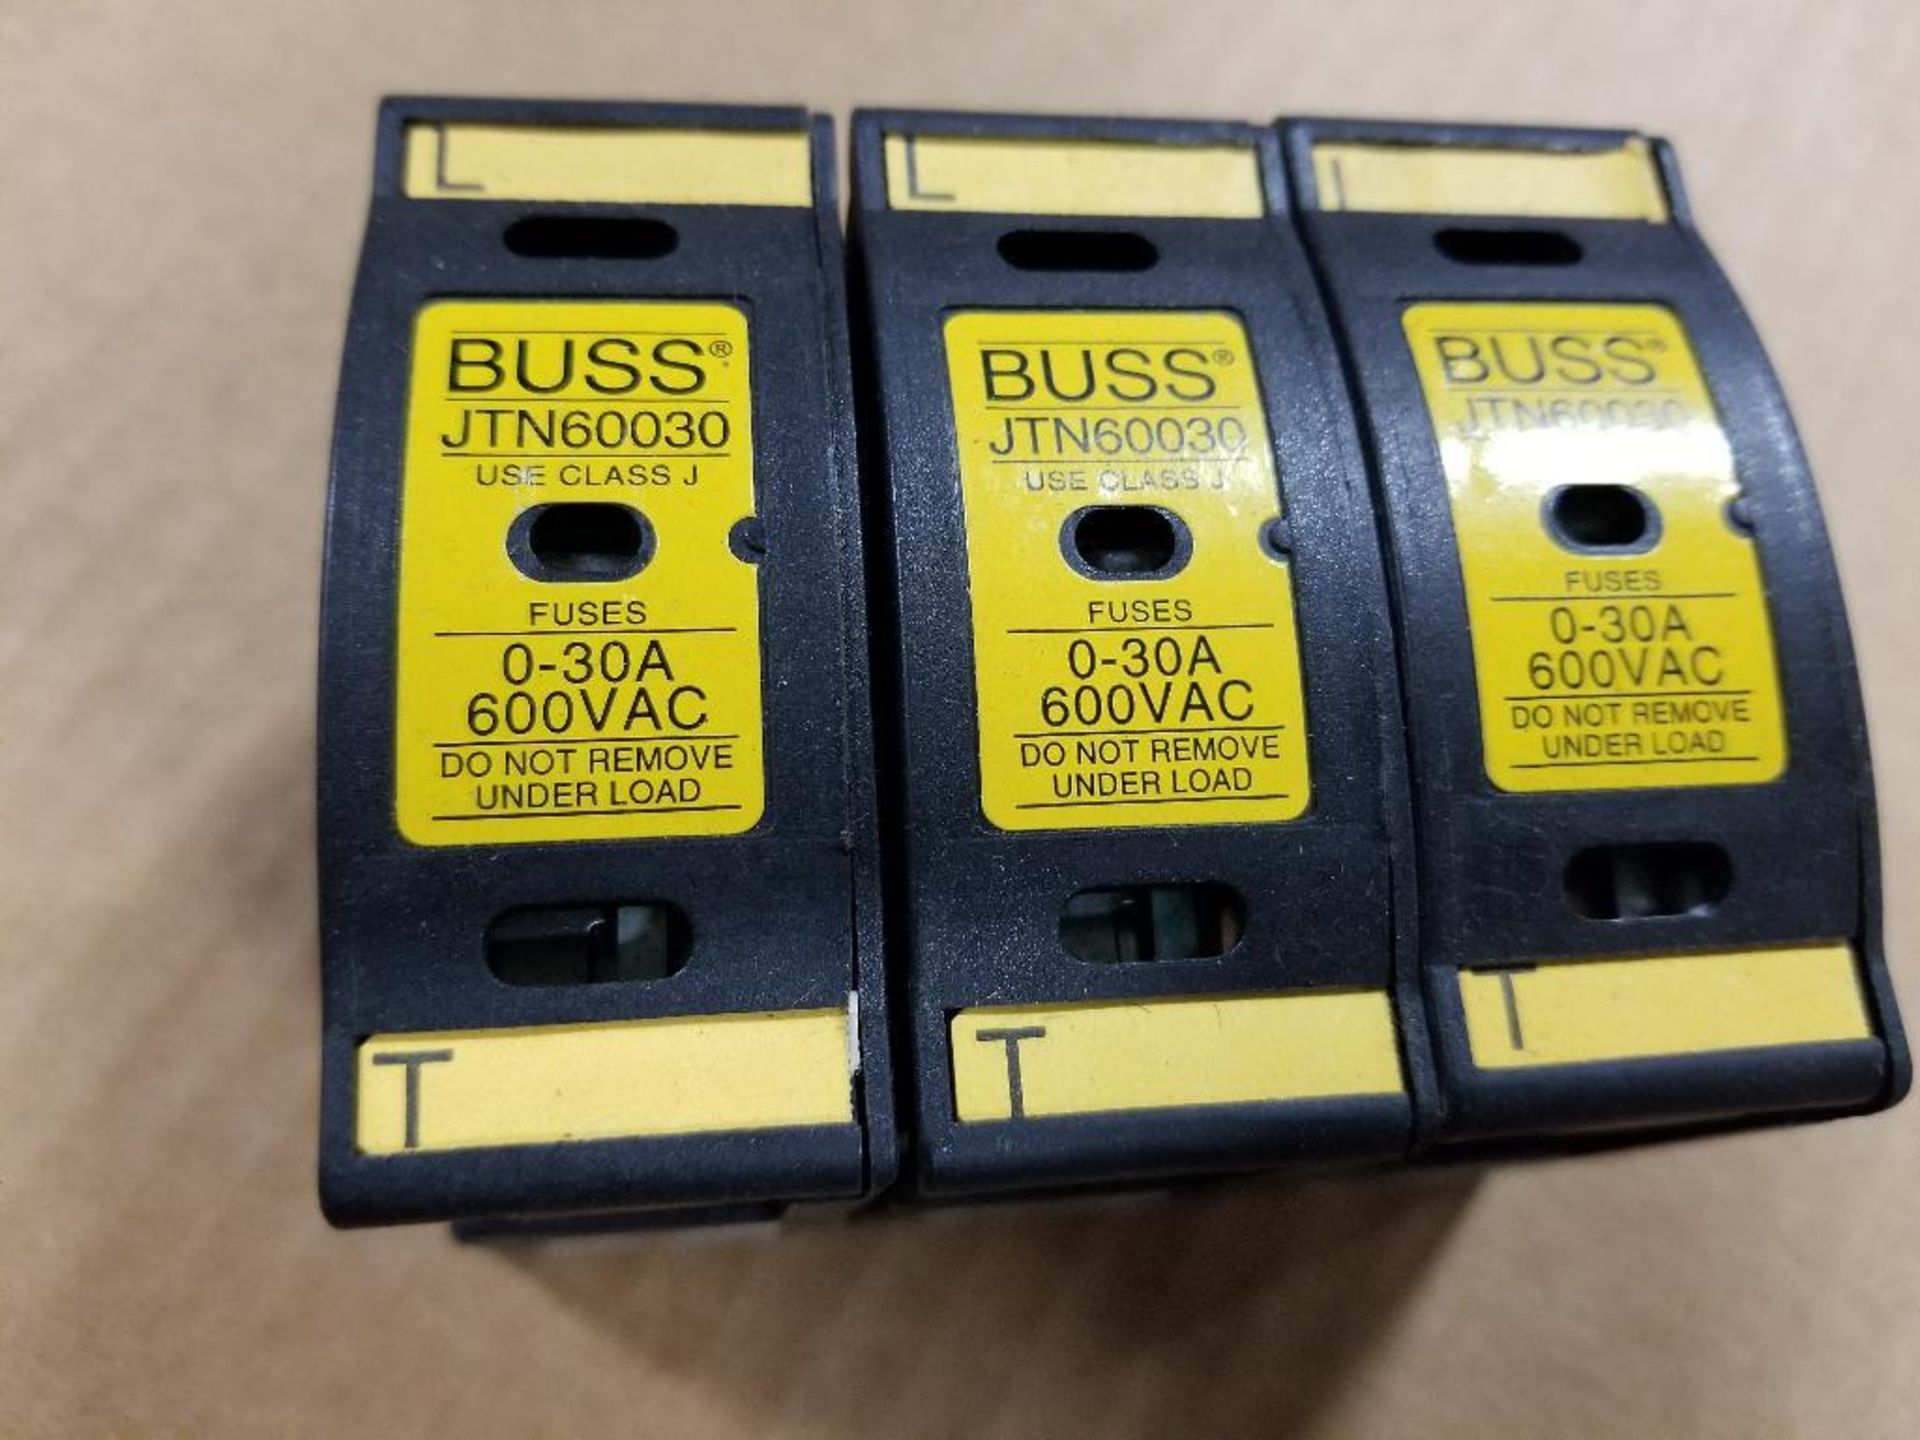 Buss JTN60030 fuse holders. - Image 2 of 2